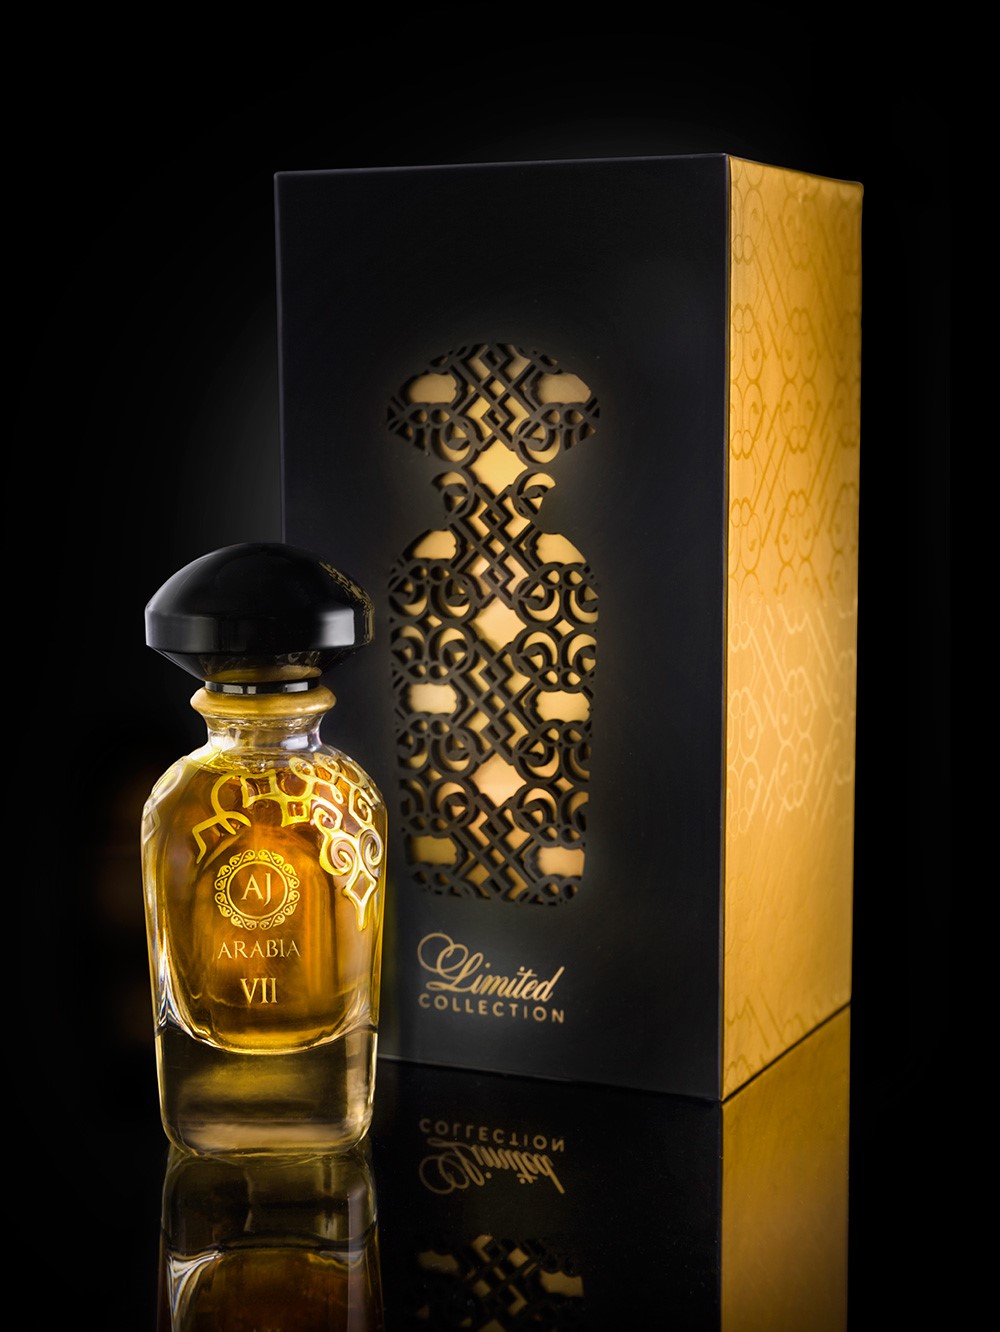 Arabia 2. AJ Arabia II духи 50мл. AJ Arabia Black collection II Parfum 50m. AJ Arabia Widian Gold collection i Parfum. AJ Arabia Widian Gold collection II Parfum.